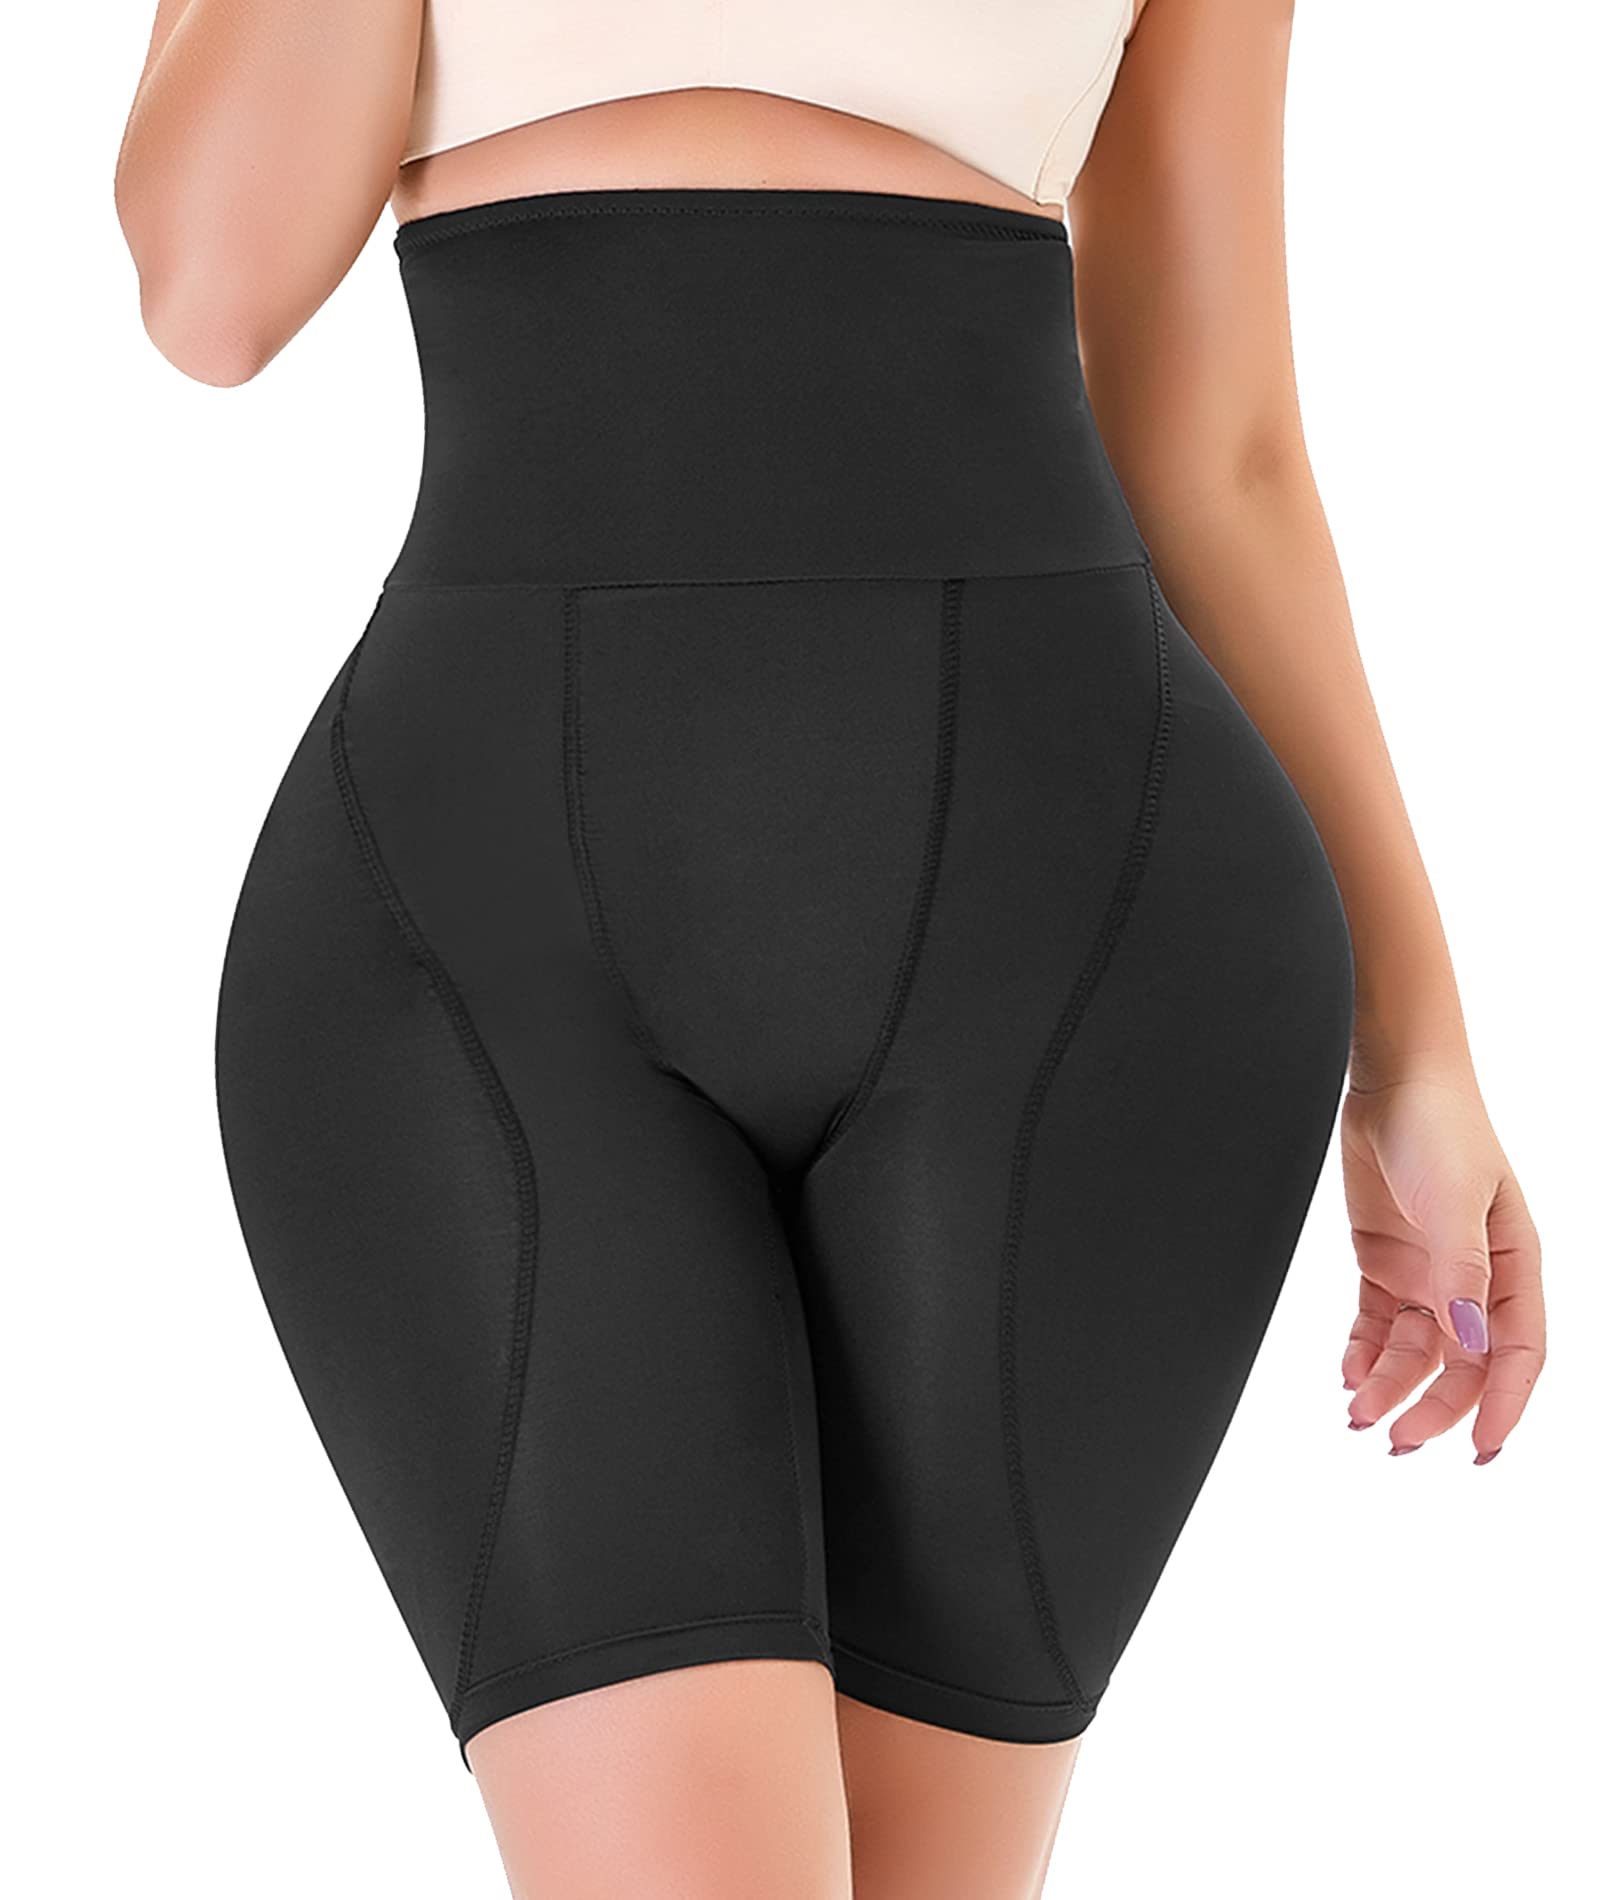  Women Shapewear Butt Lifter Body Shaper Panties High Waist  Hip Padded Enhancer Booty Lifter Tummy Control Panty Black